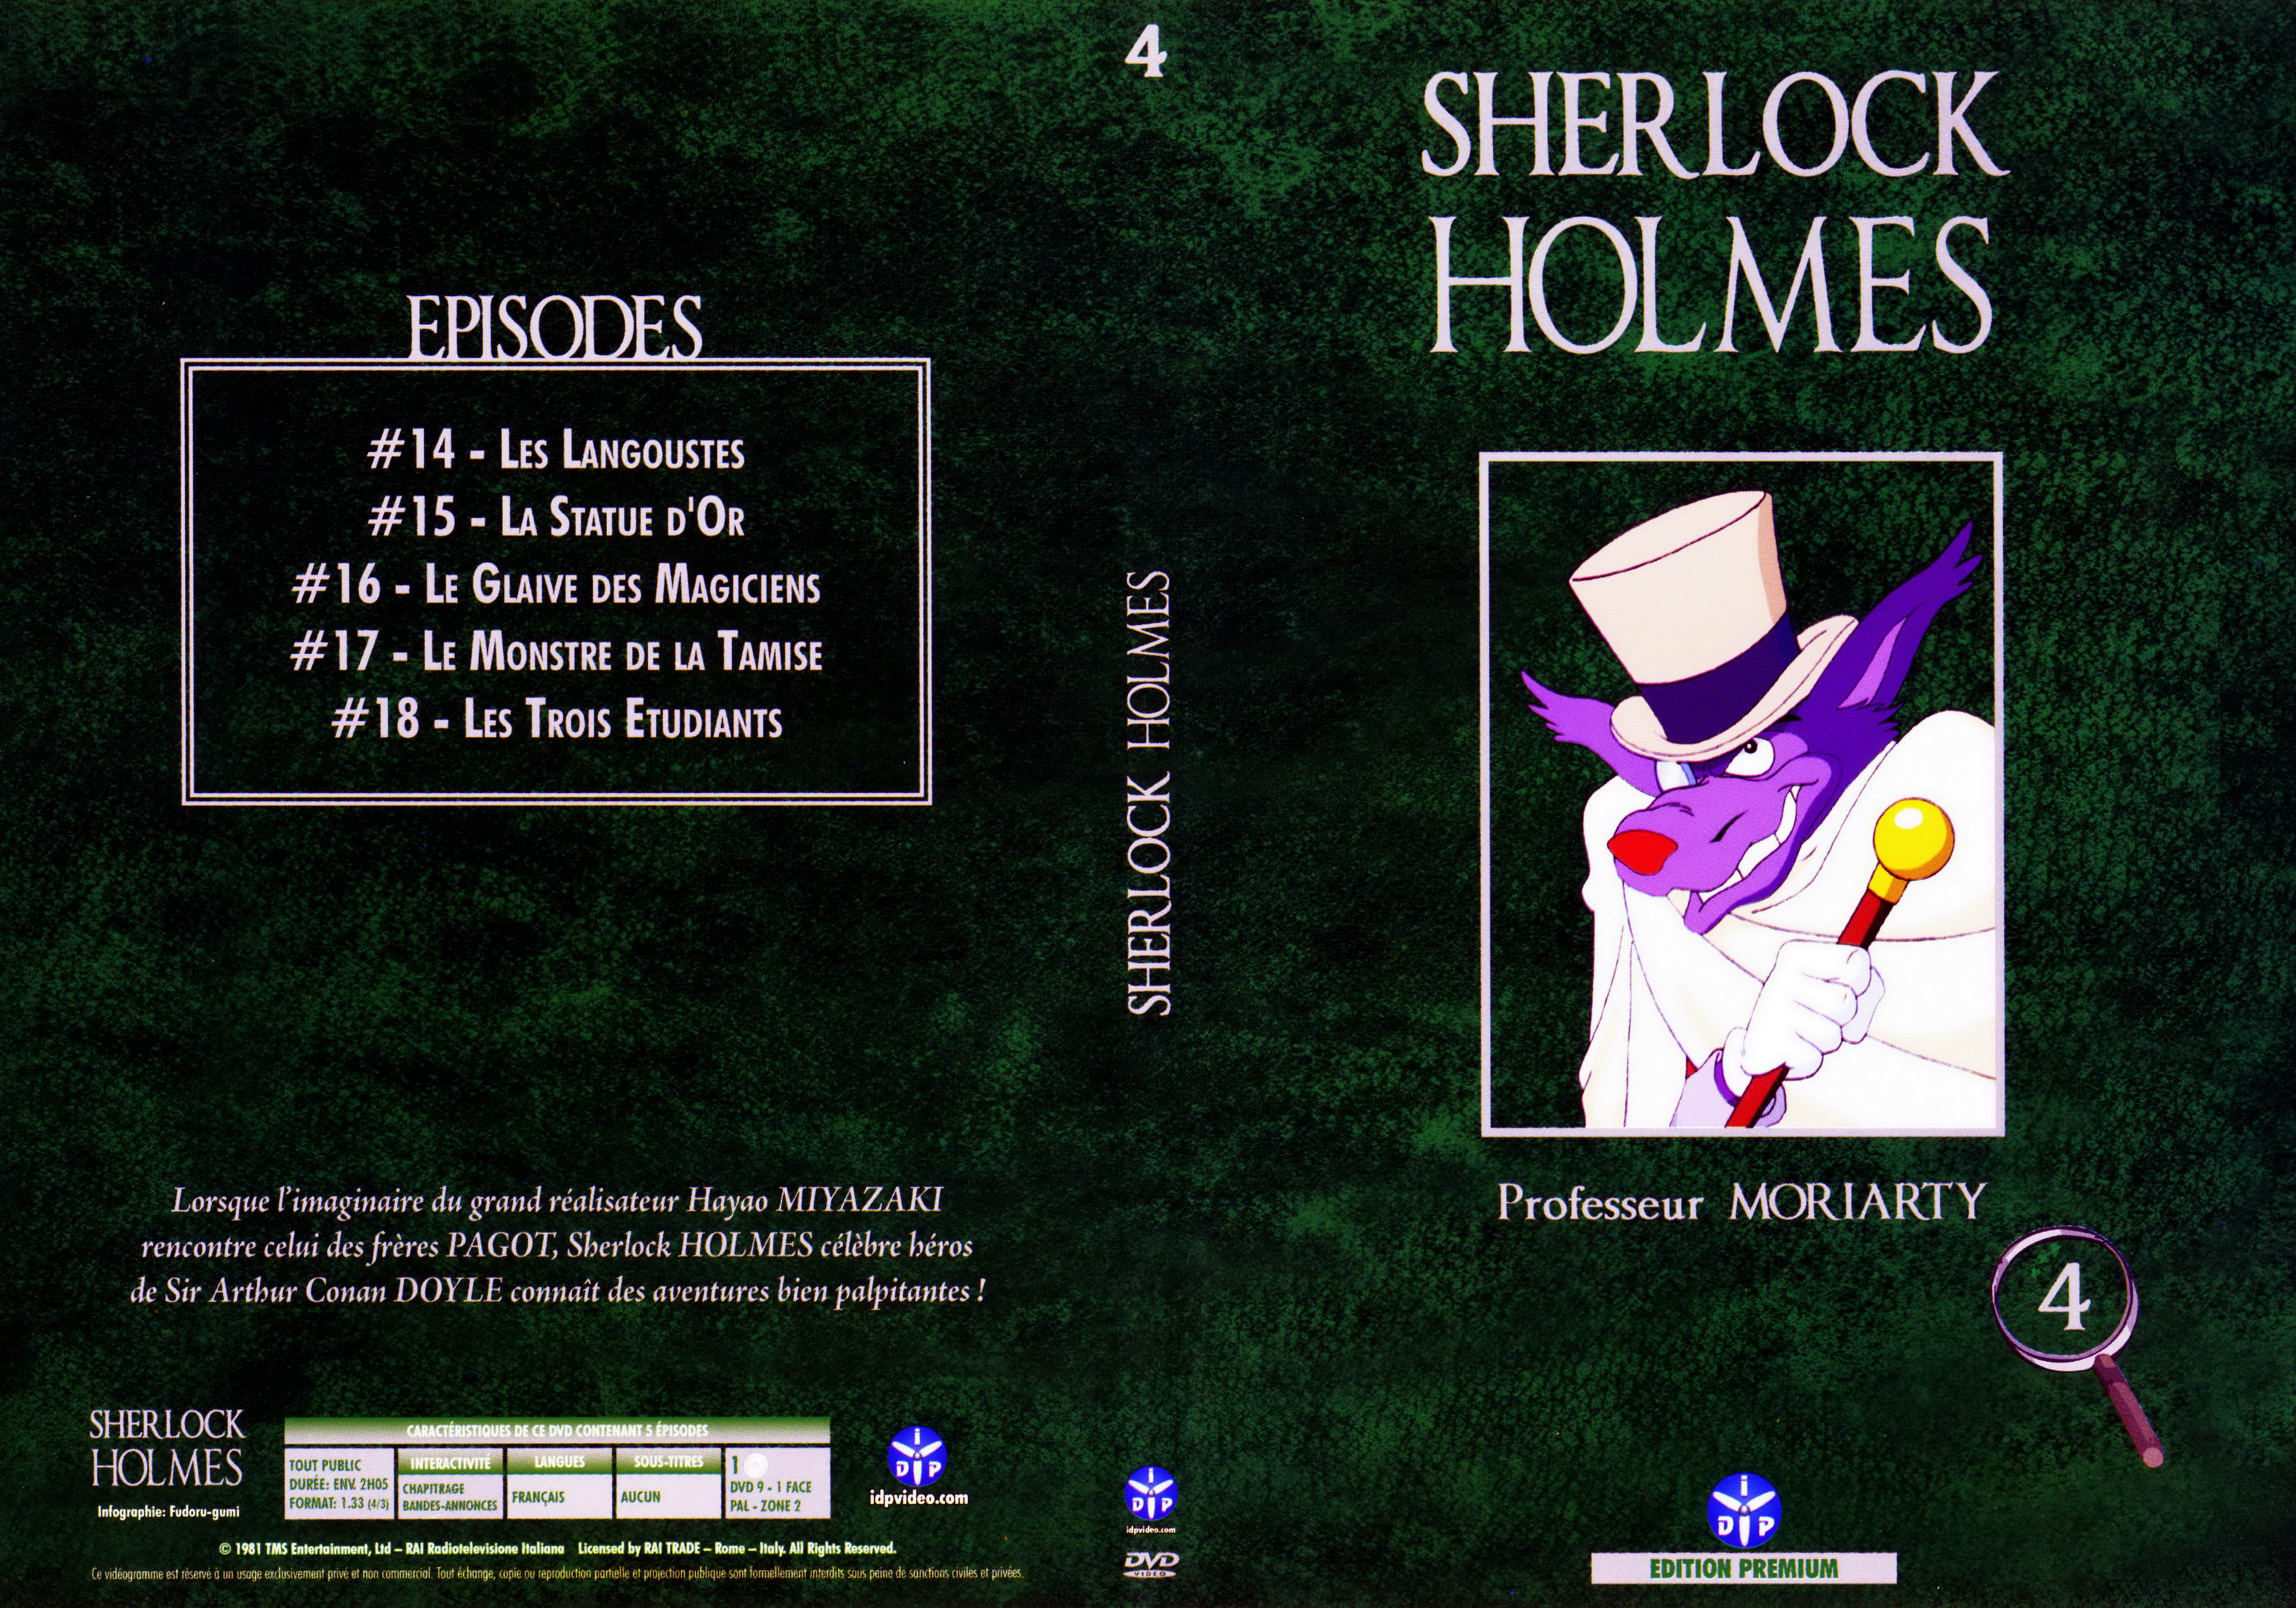 Jaquette DVD Sherlock Holmes vol 4 v2